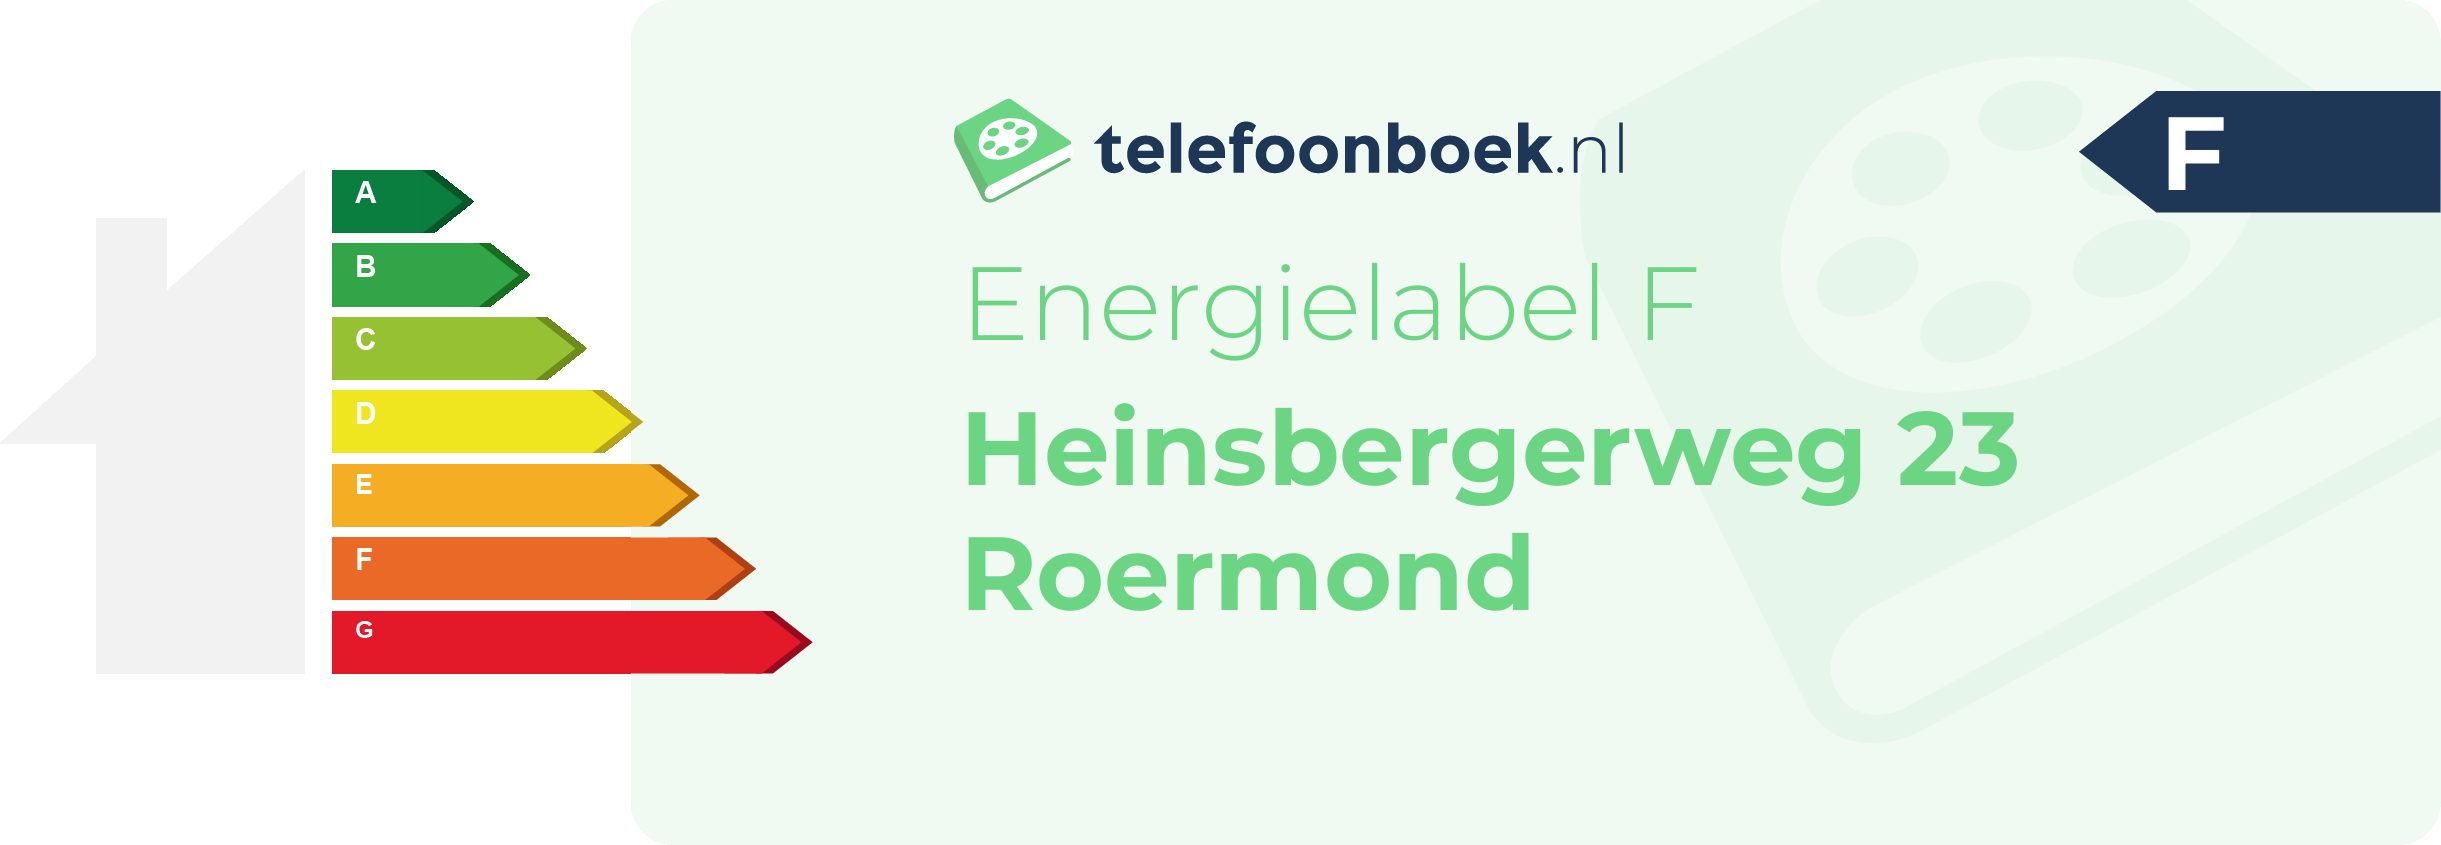 Energielabel Heinsbergerweg 23 Roermond